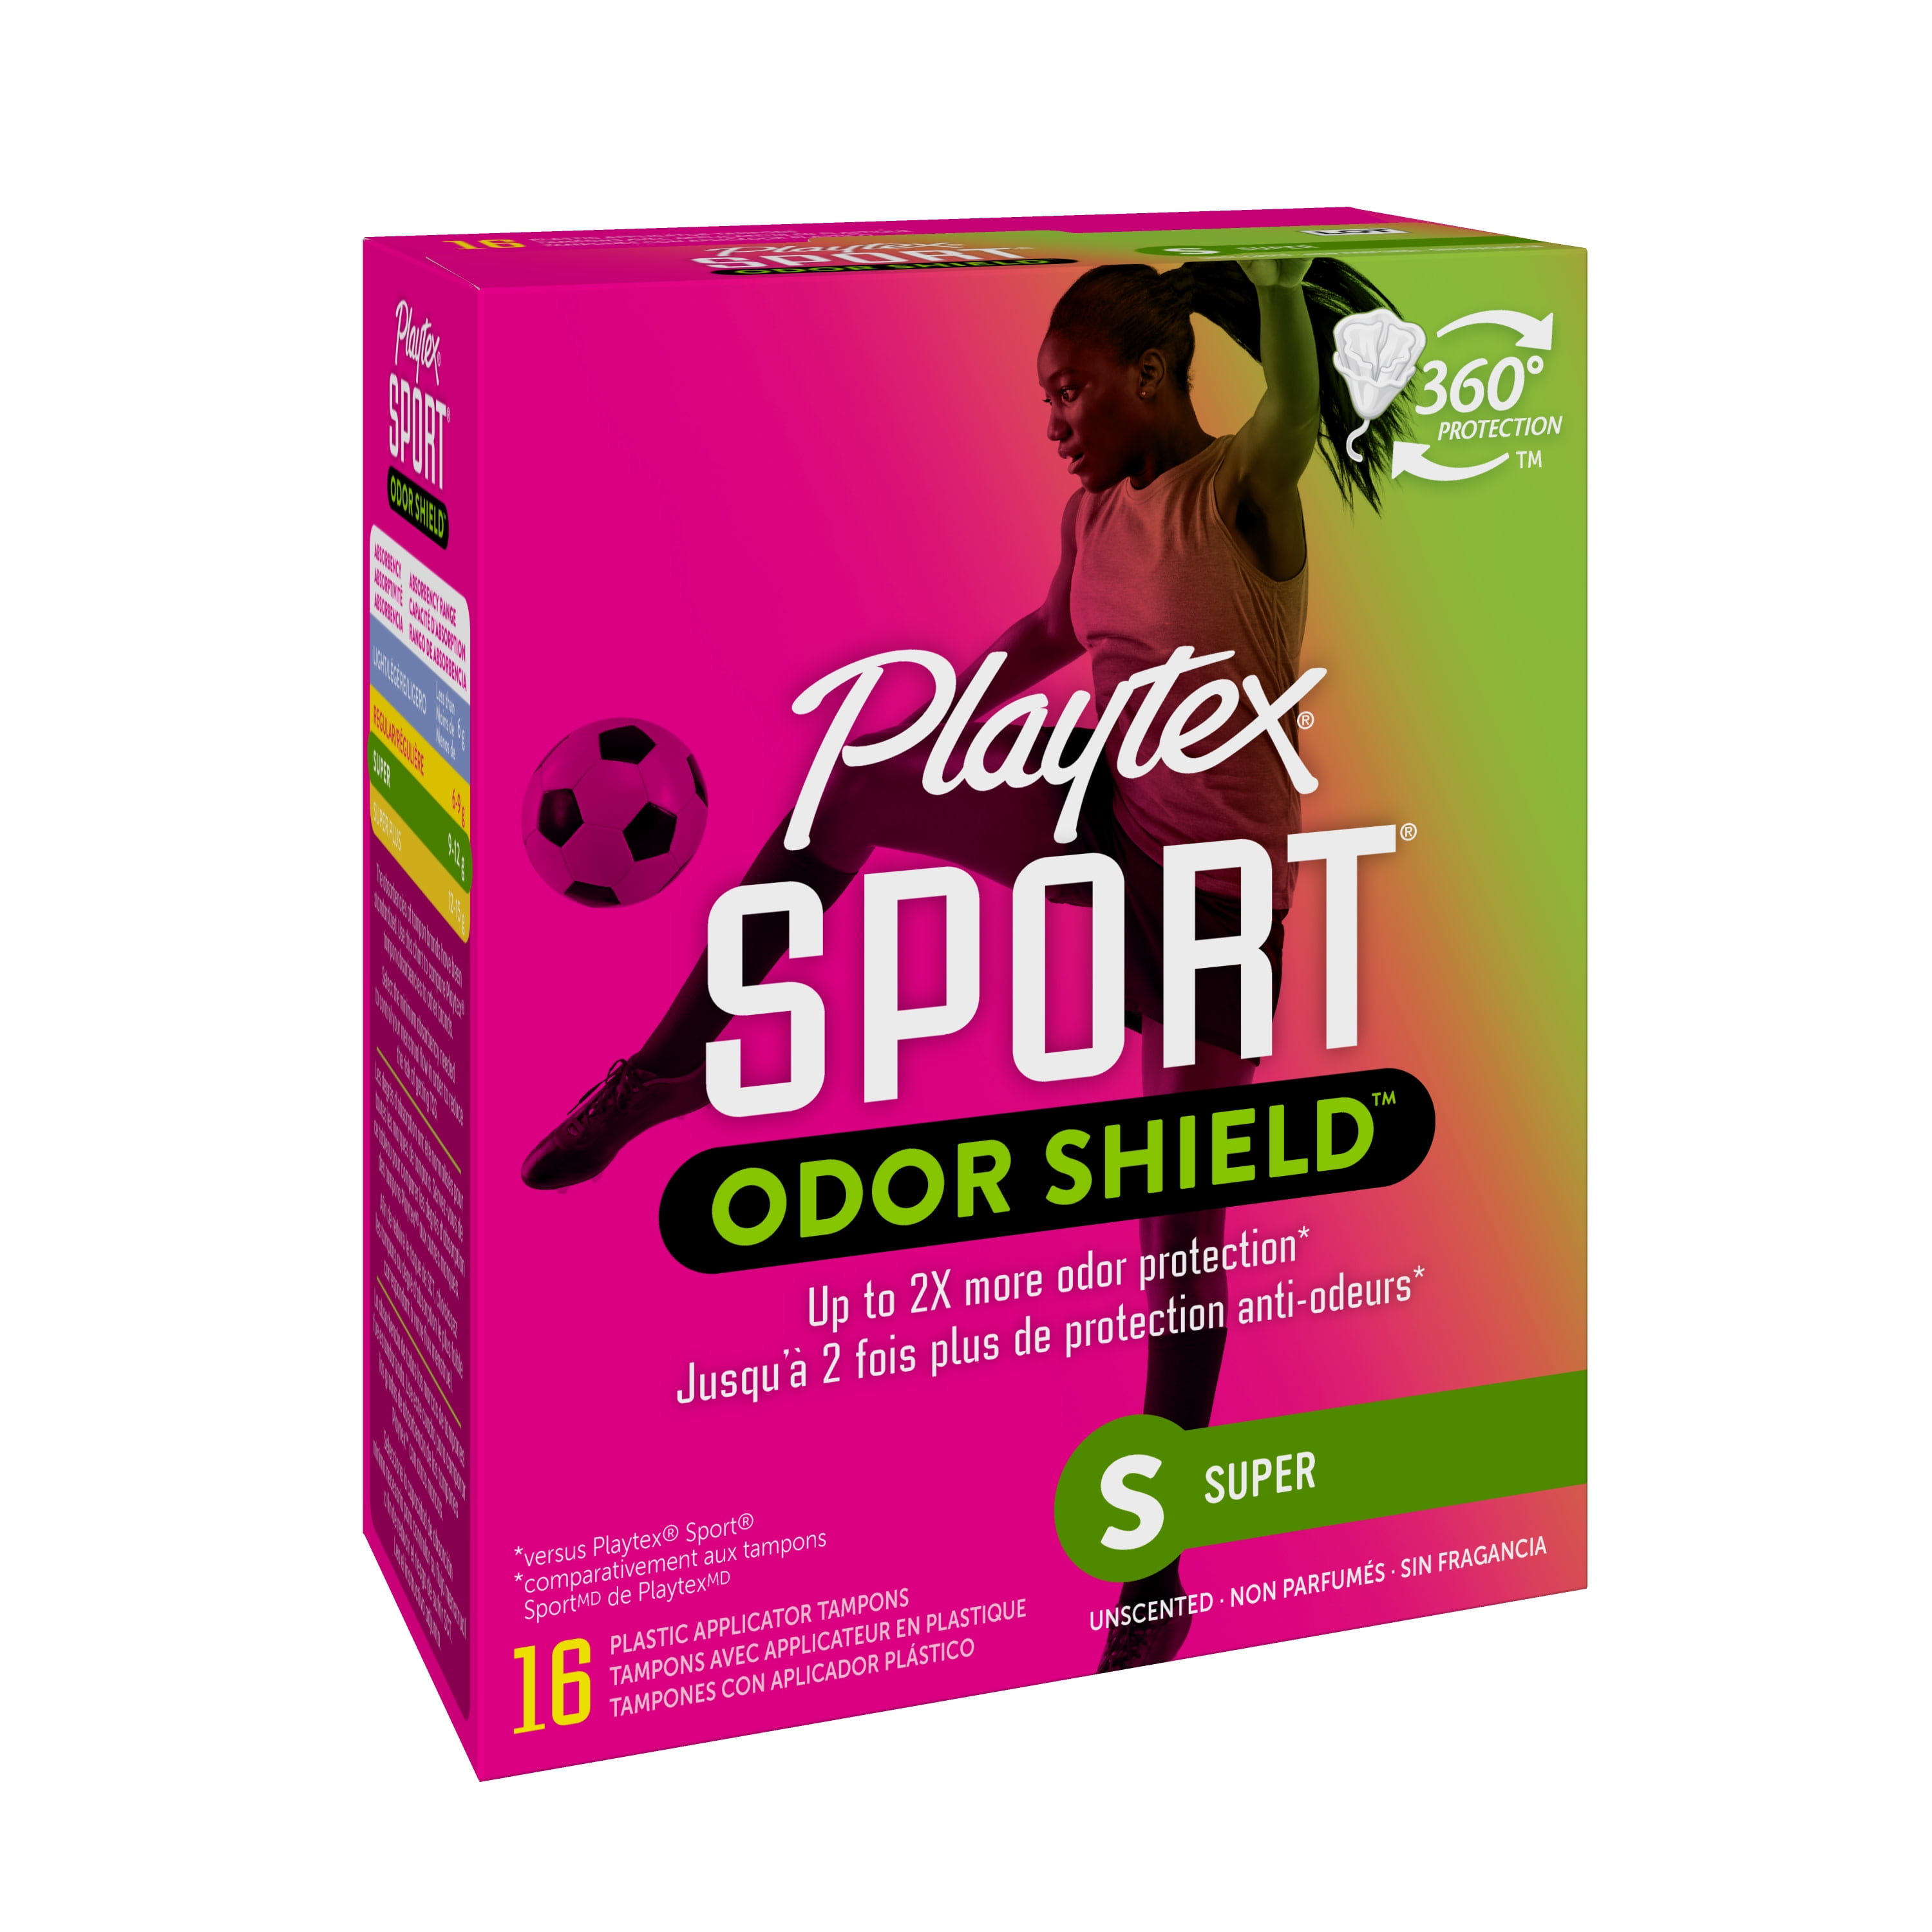 Playtex Sport Odor Shield Tampons, Super Absorbency, 16 ct